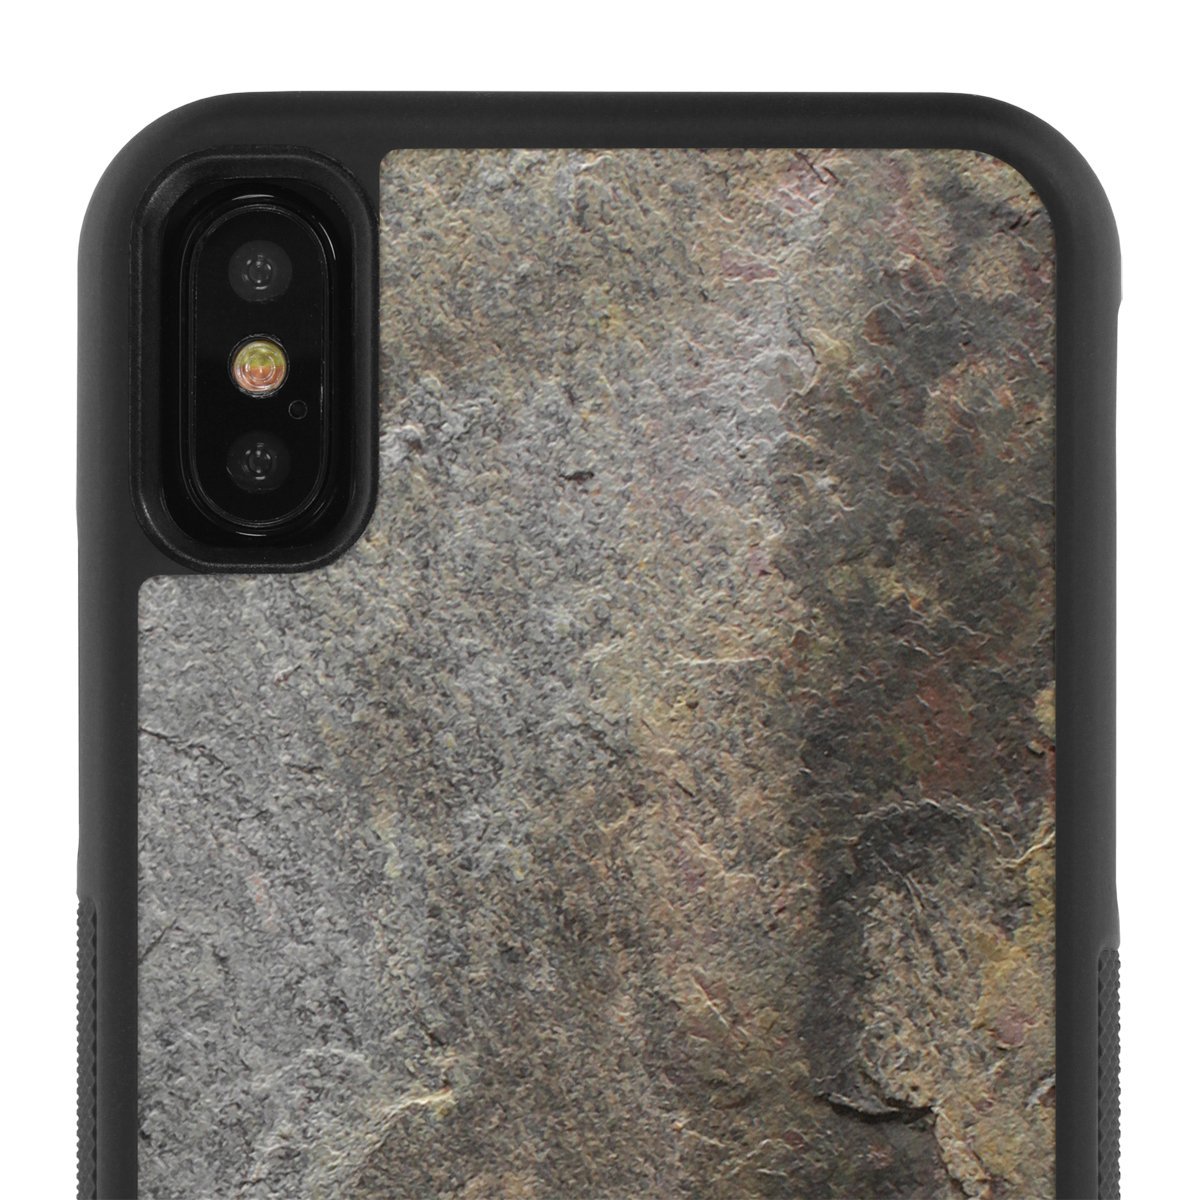 iPhone XR —  Stone Explorer Case